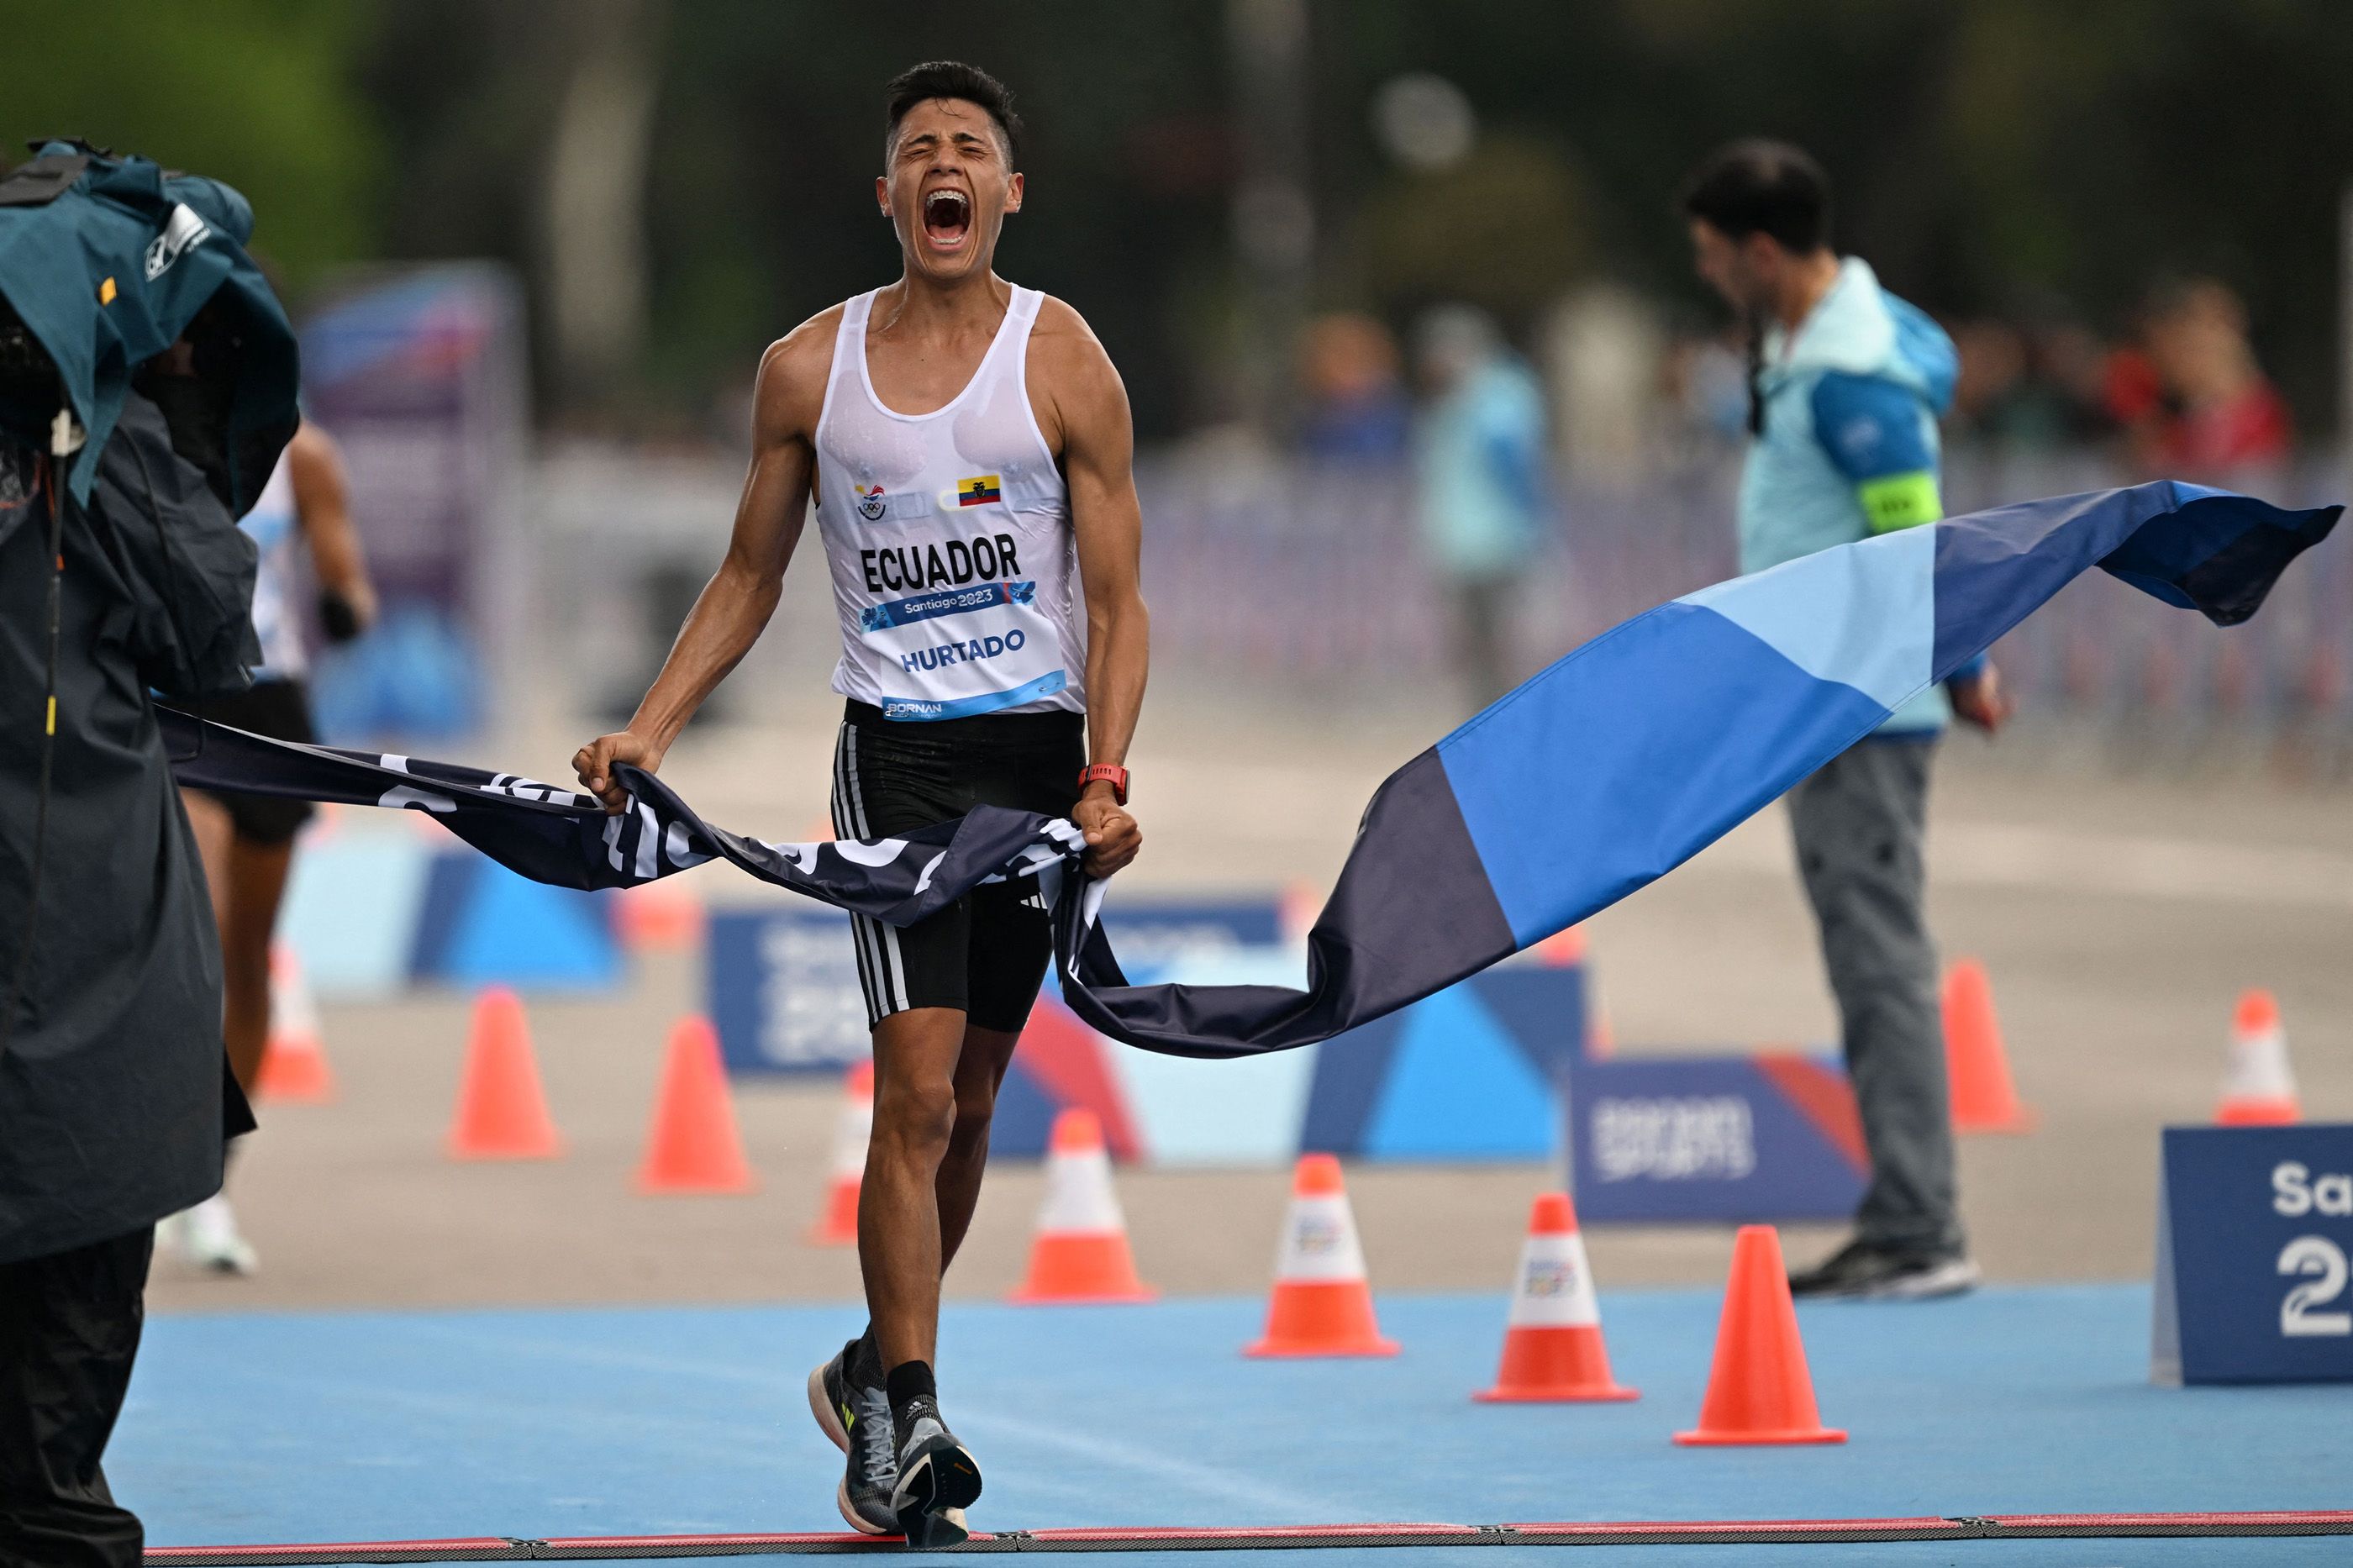 David Hurtado wins the men's 20km race walk at the Pan American Games